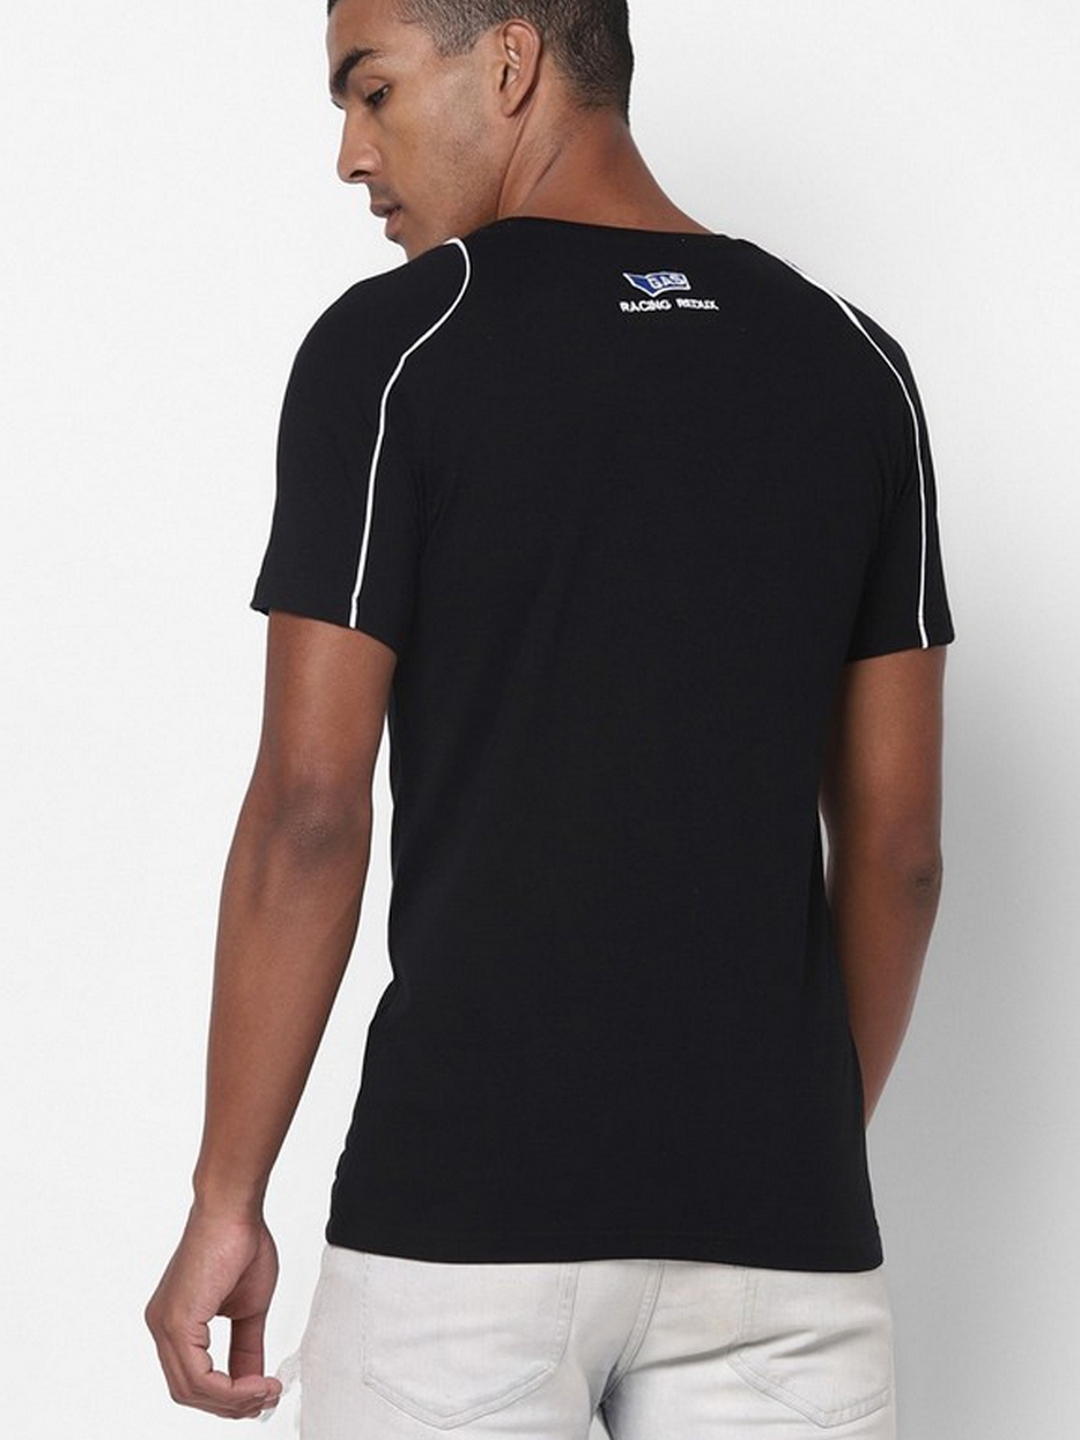 Men's Scuba/s printed round neck black t-shirt